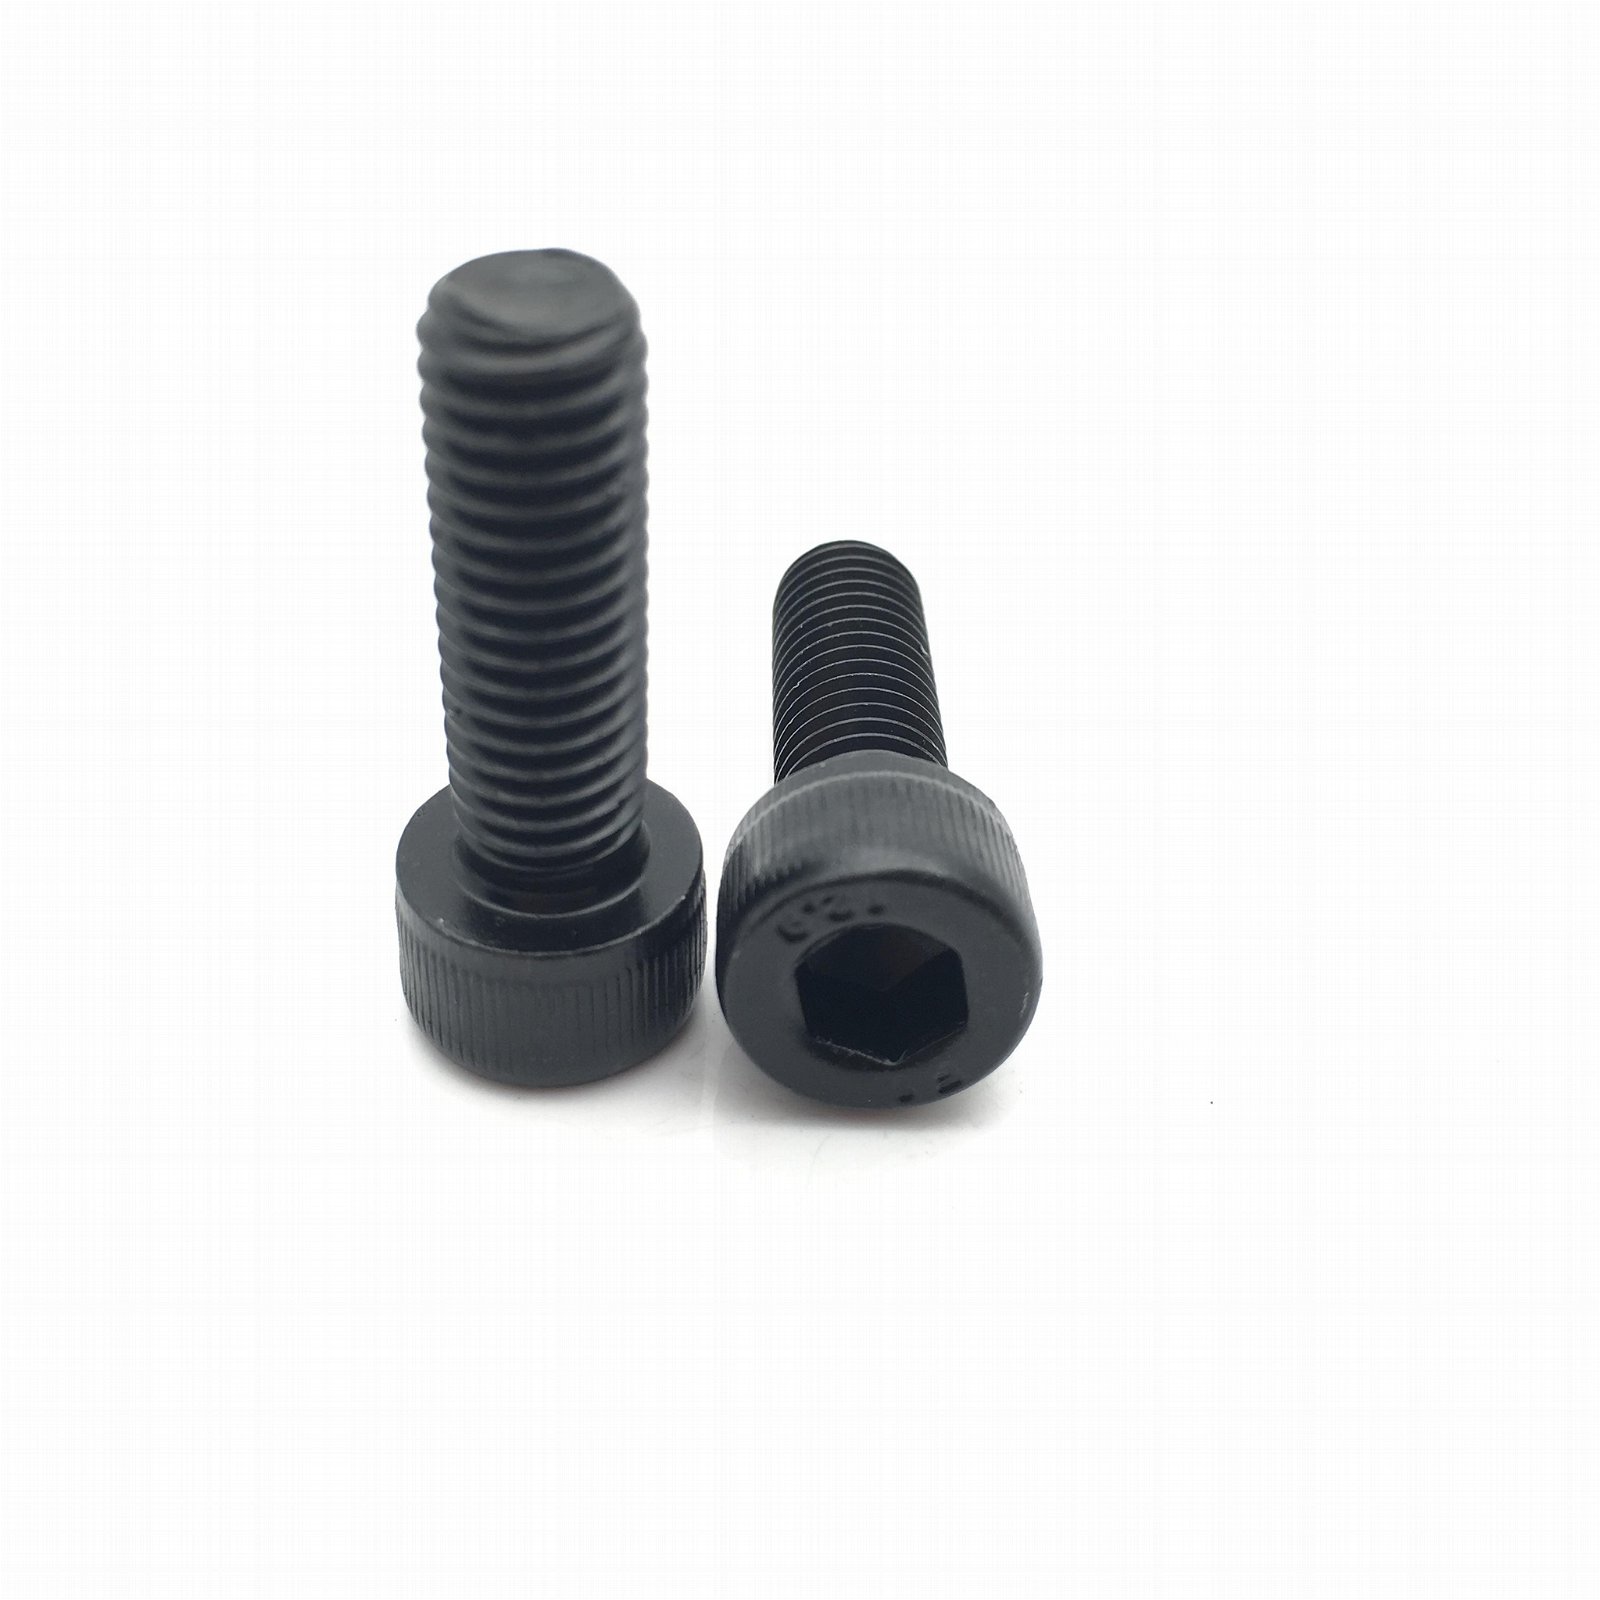 Alloy steel black oxide gr12.9 allen screw hex socket cap screw bolt DIN912 2